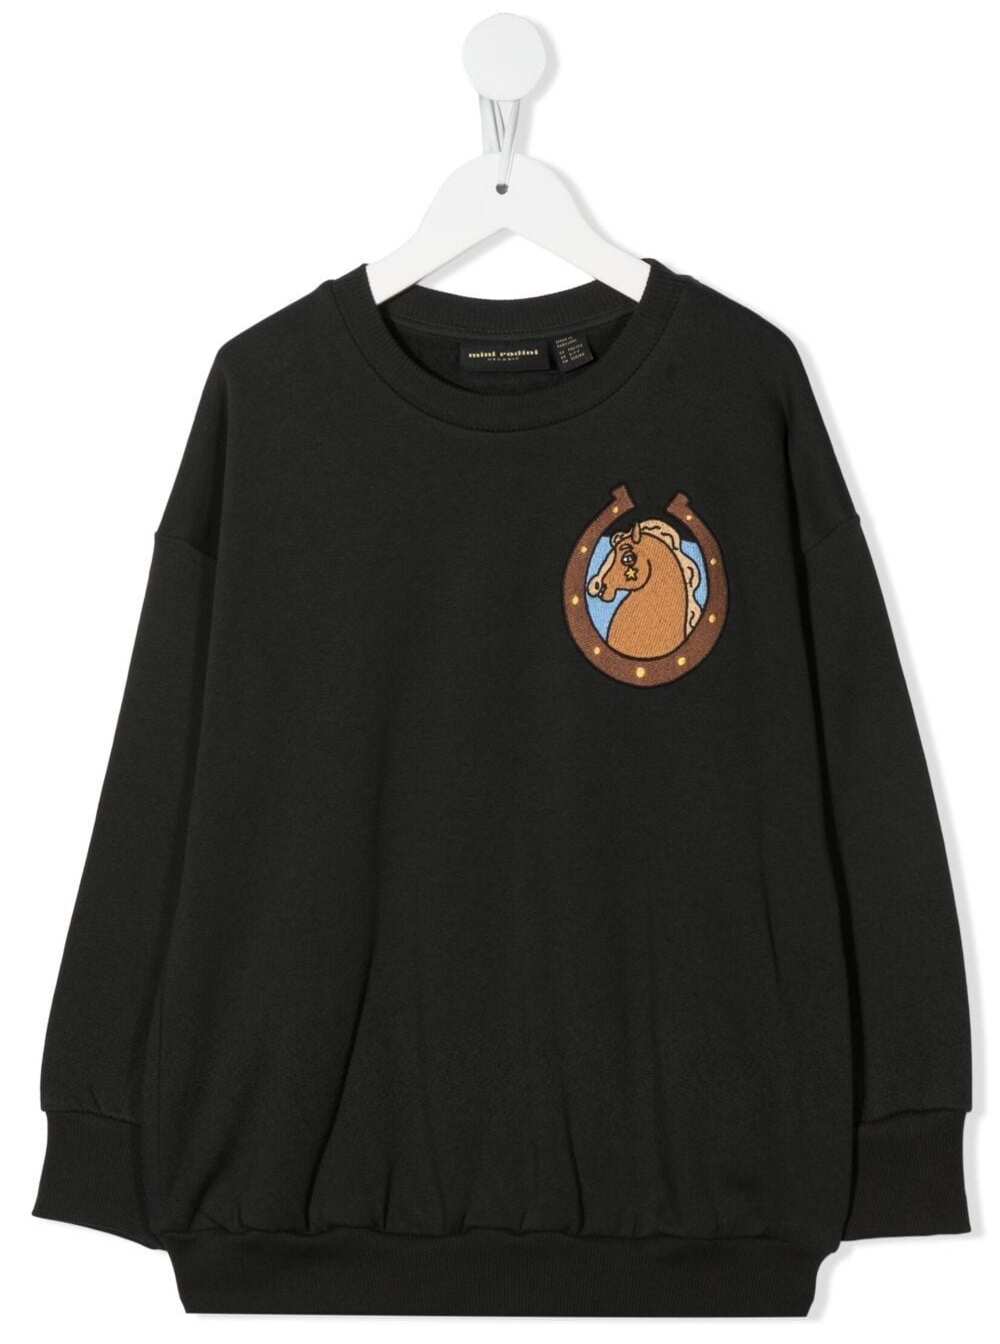 Mini Rodini Black Organic Cotton Sweatshirt With Graphic Print Embroidered On The Chest